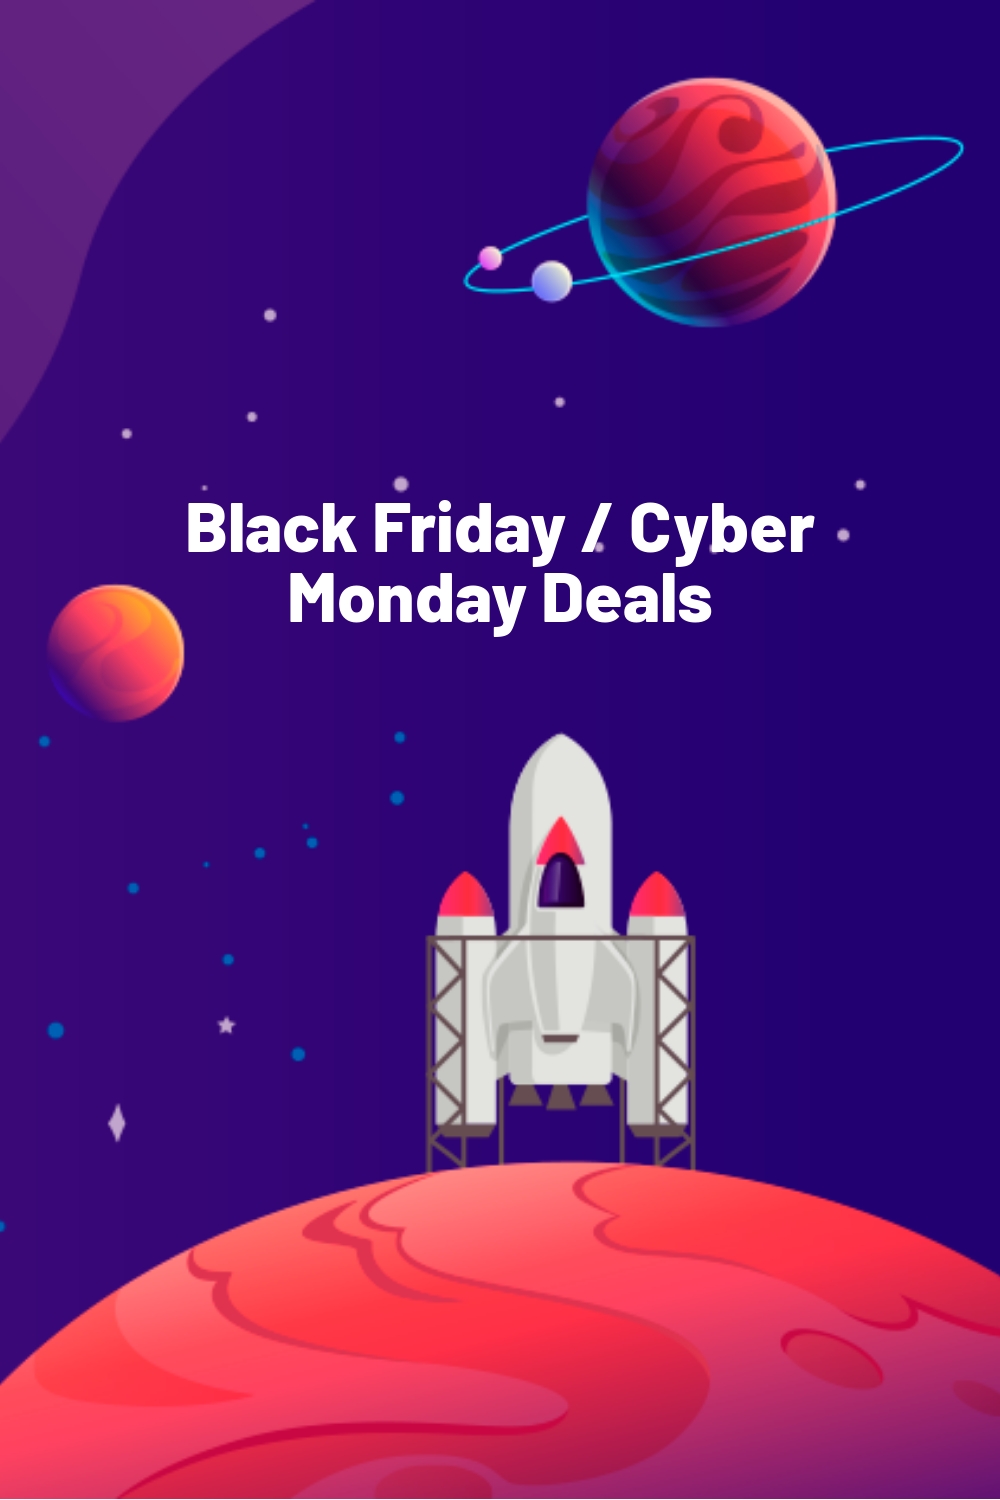 Black Friday / Cyber Monday Deals